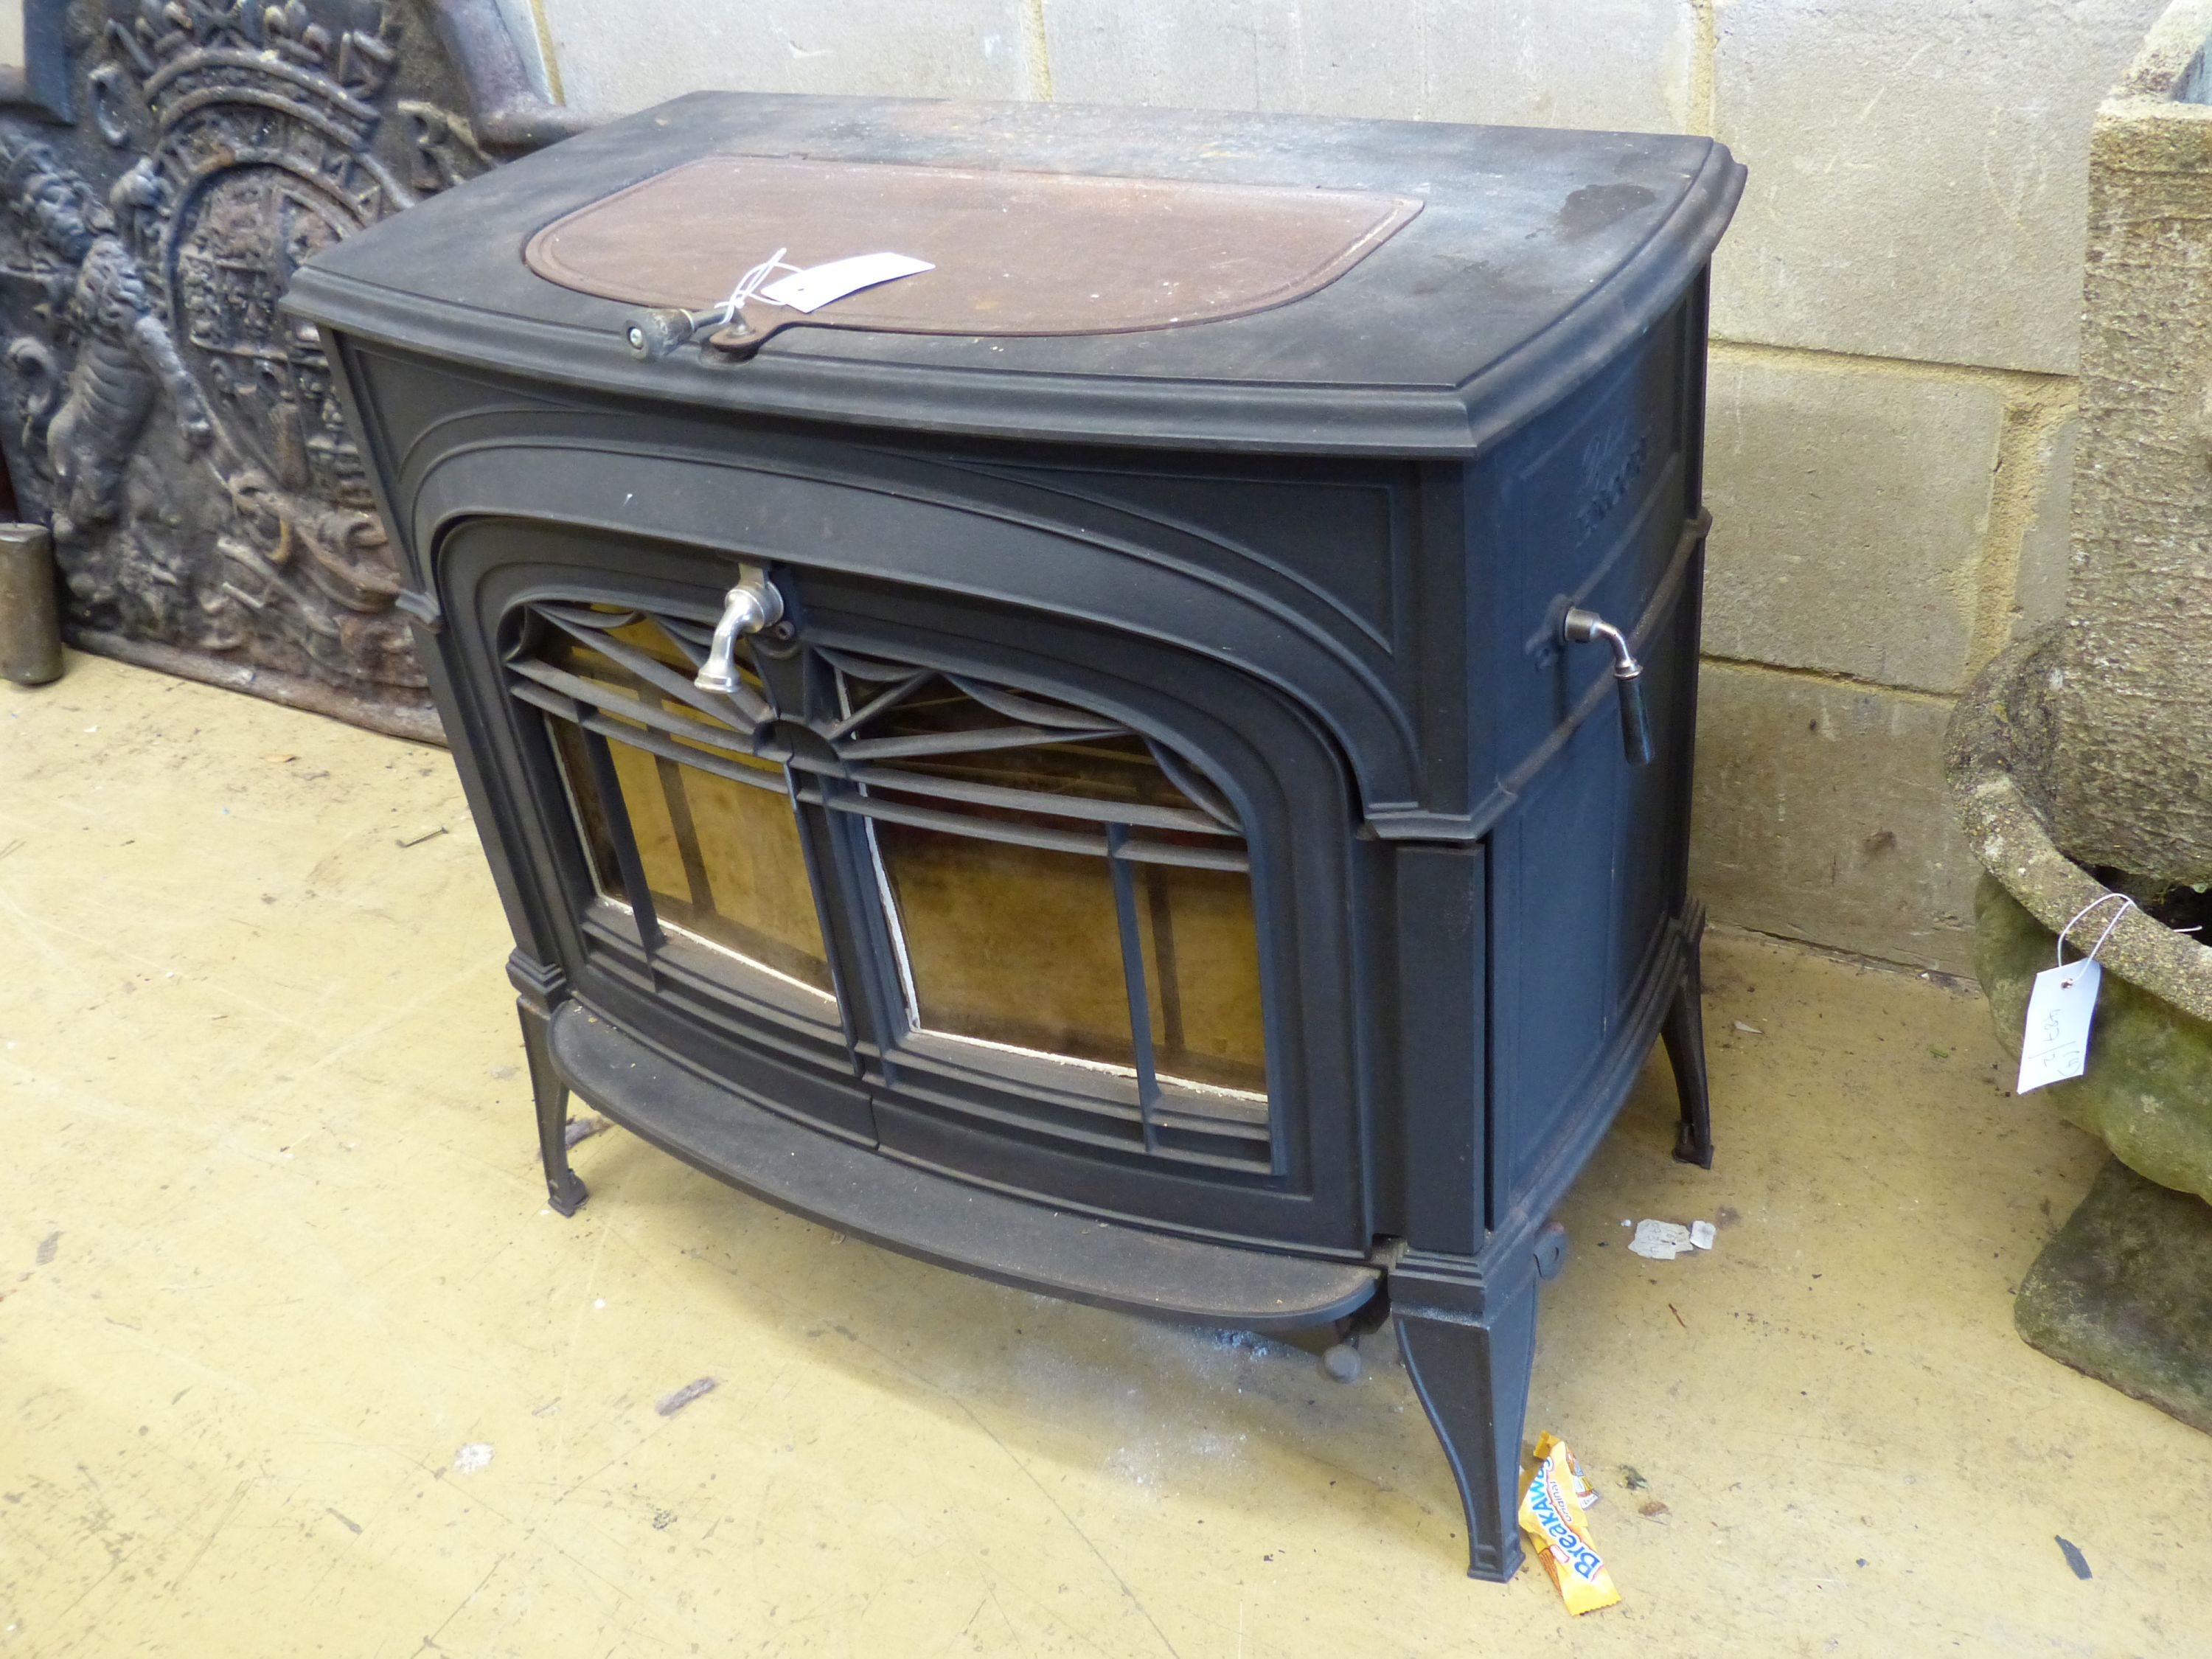 A Defiant Encore cast iron woodburning stove, width 68cm, depth 50cm, height 66cm